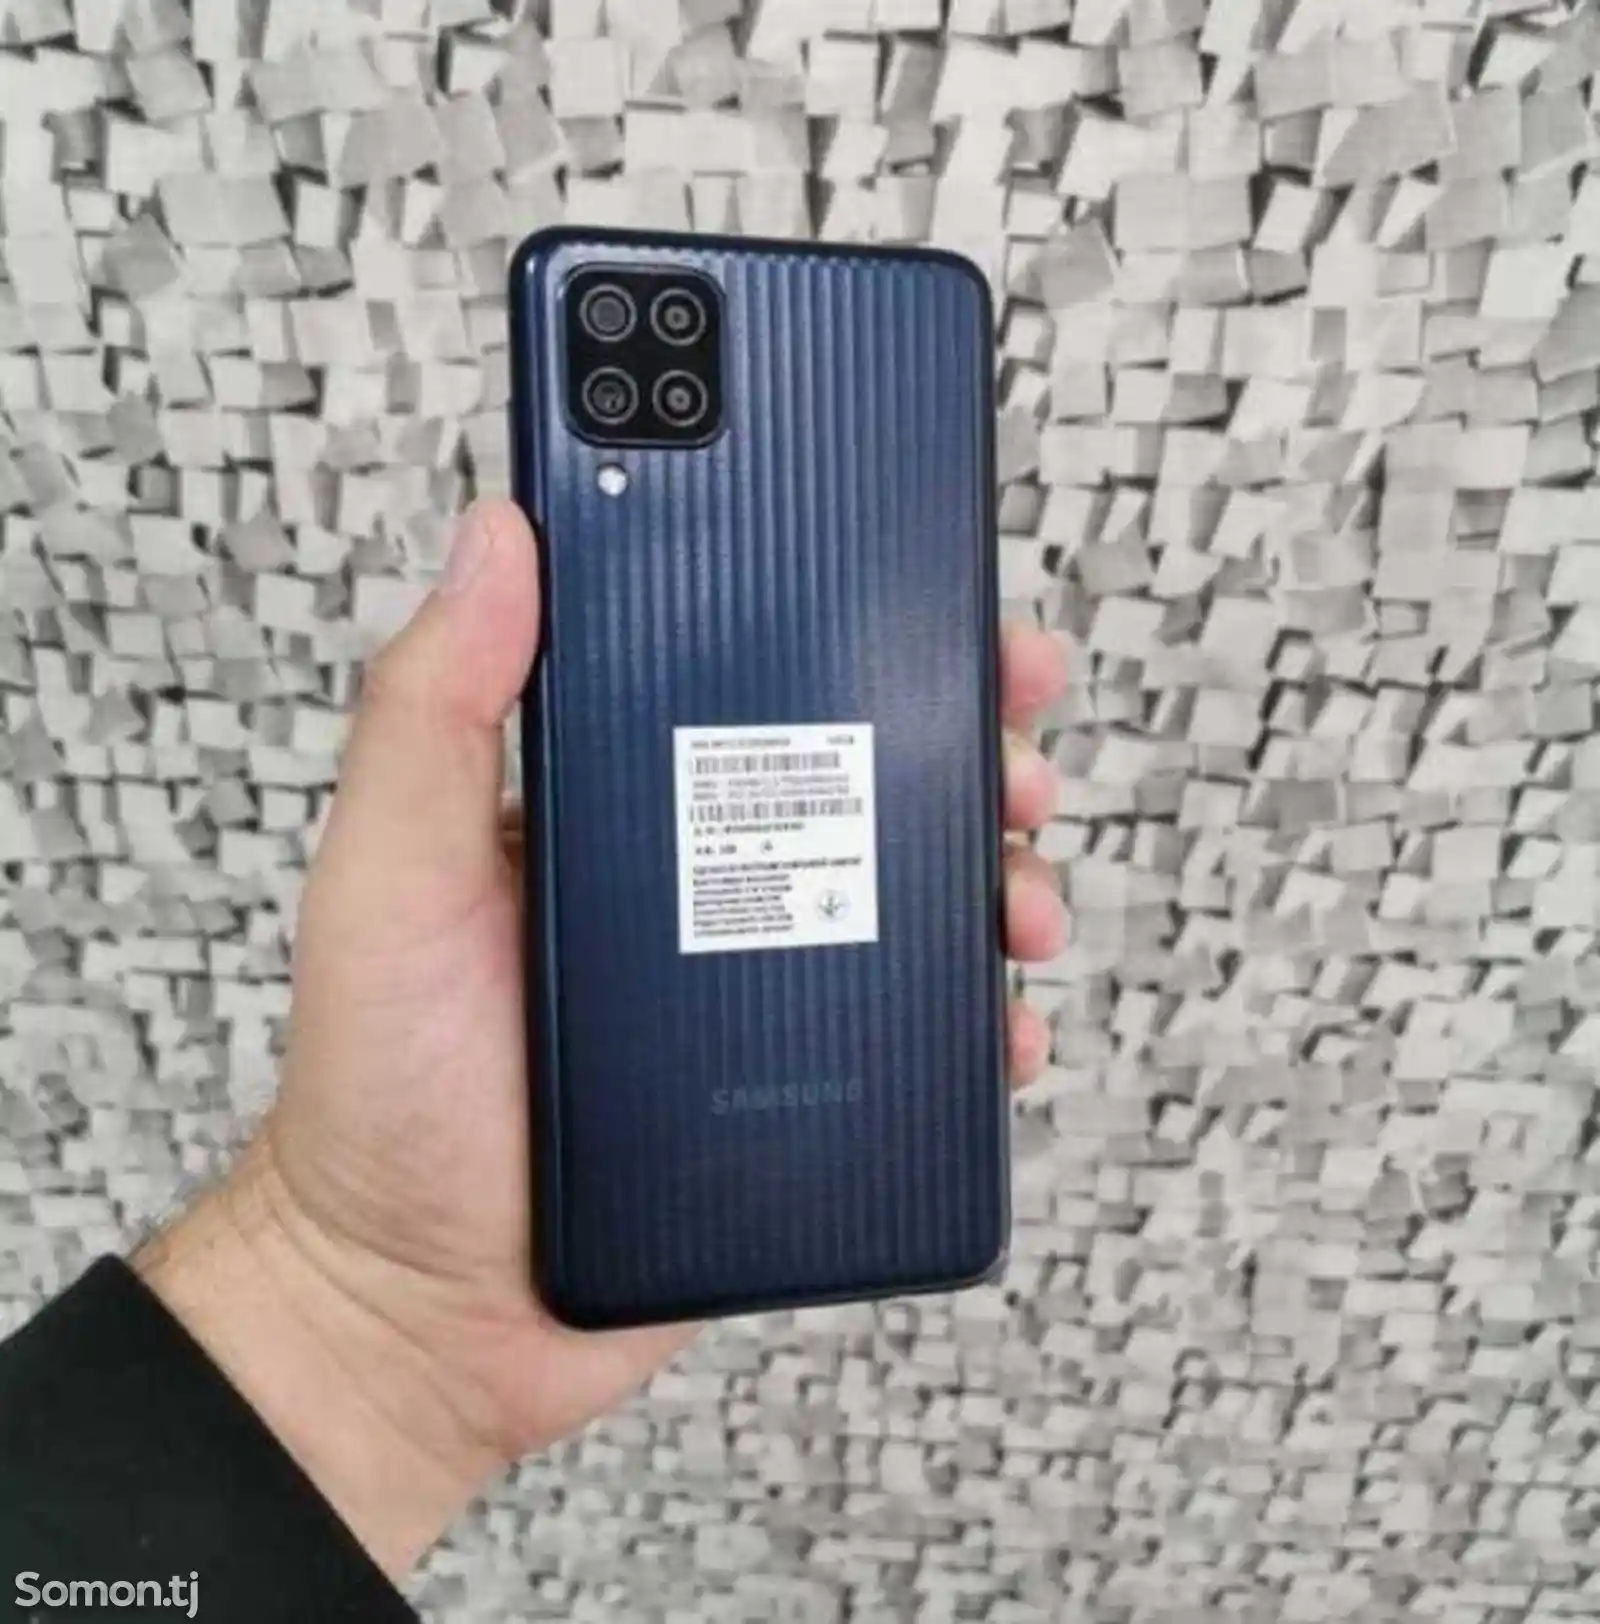 Samsung Galaxy M12-1